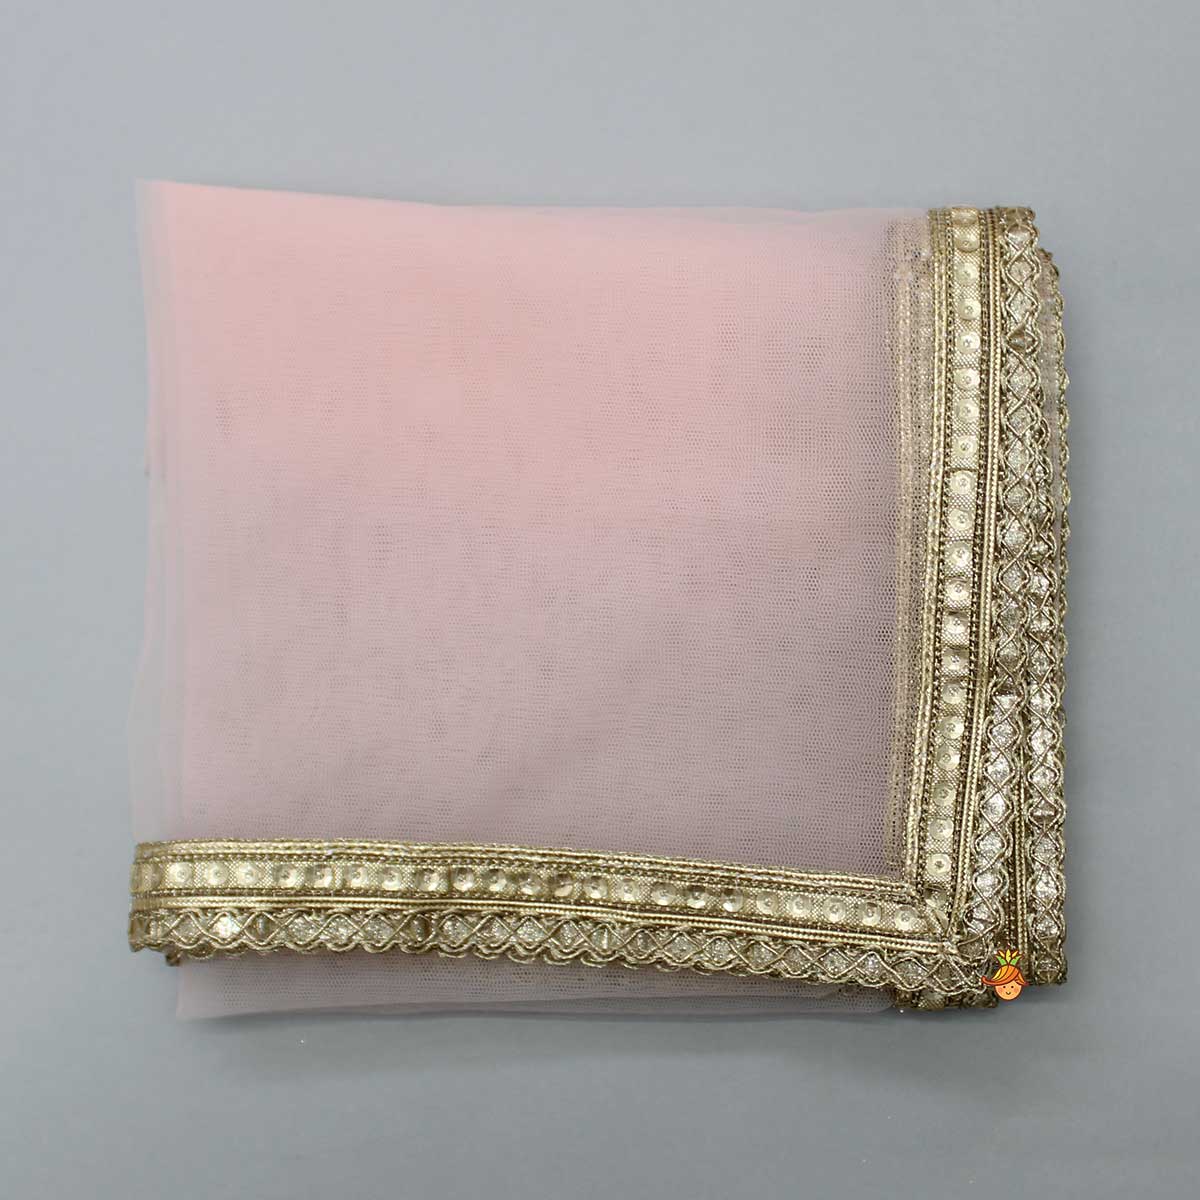 Mirror Work Peach Top And Net Tassels Enhanced Printed Lehenga With Matching Dupatta